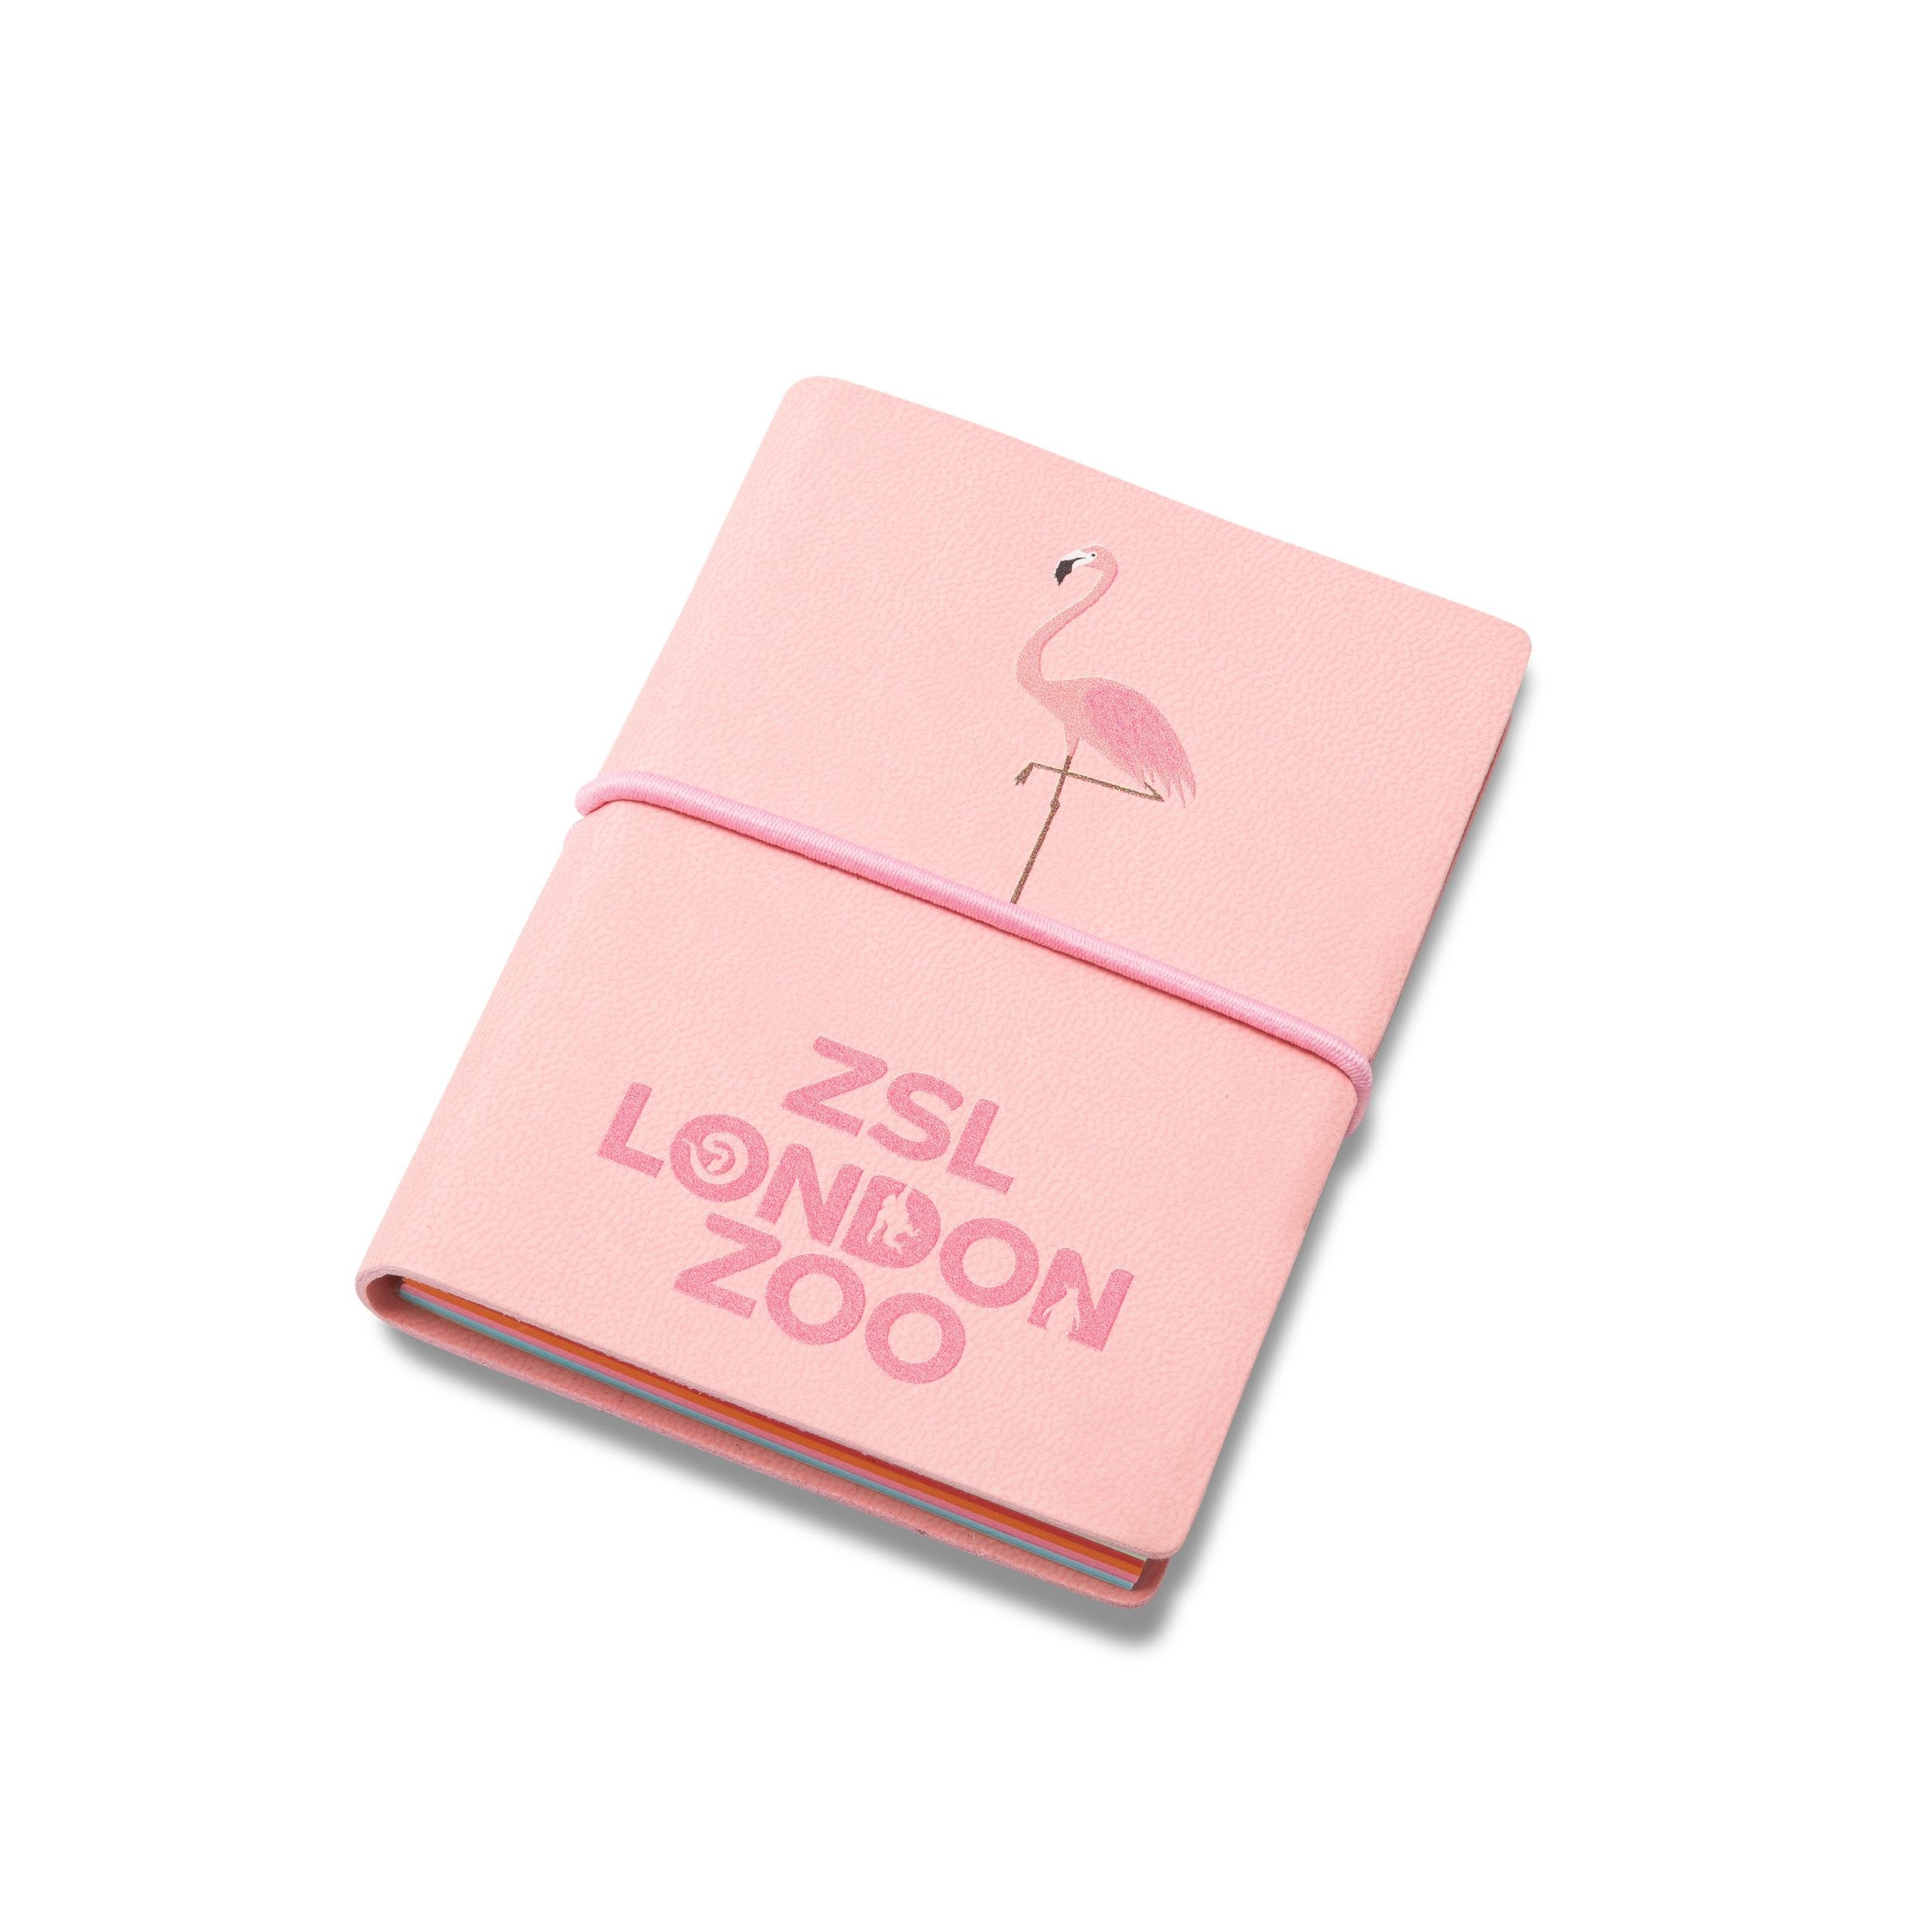 ZSL London Zoo Flamingo Pocket Notebook, A7